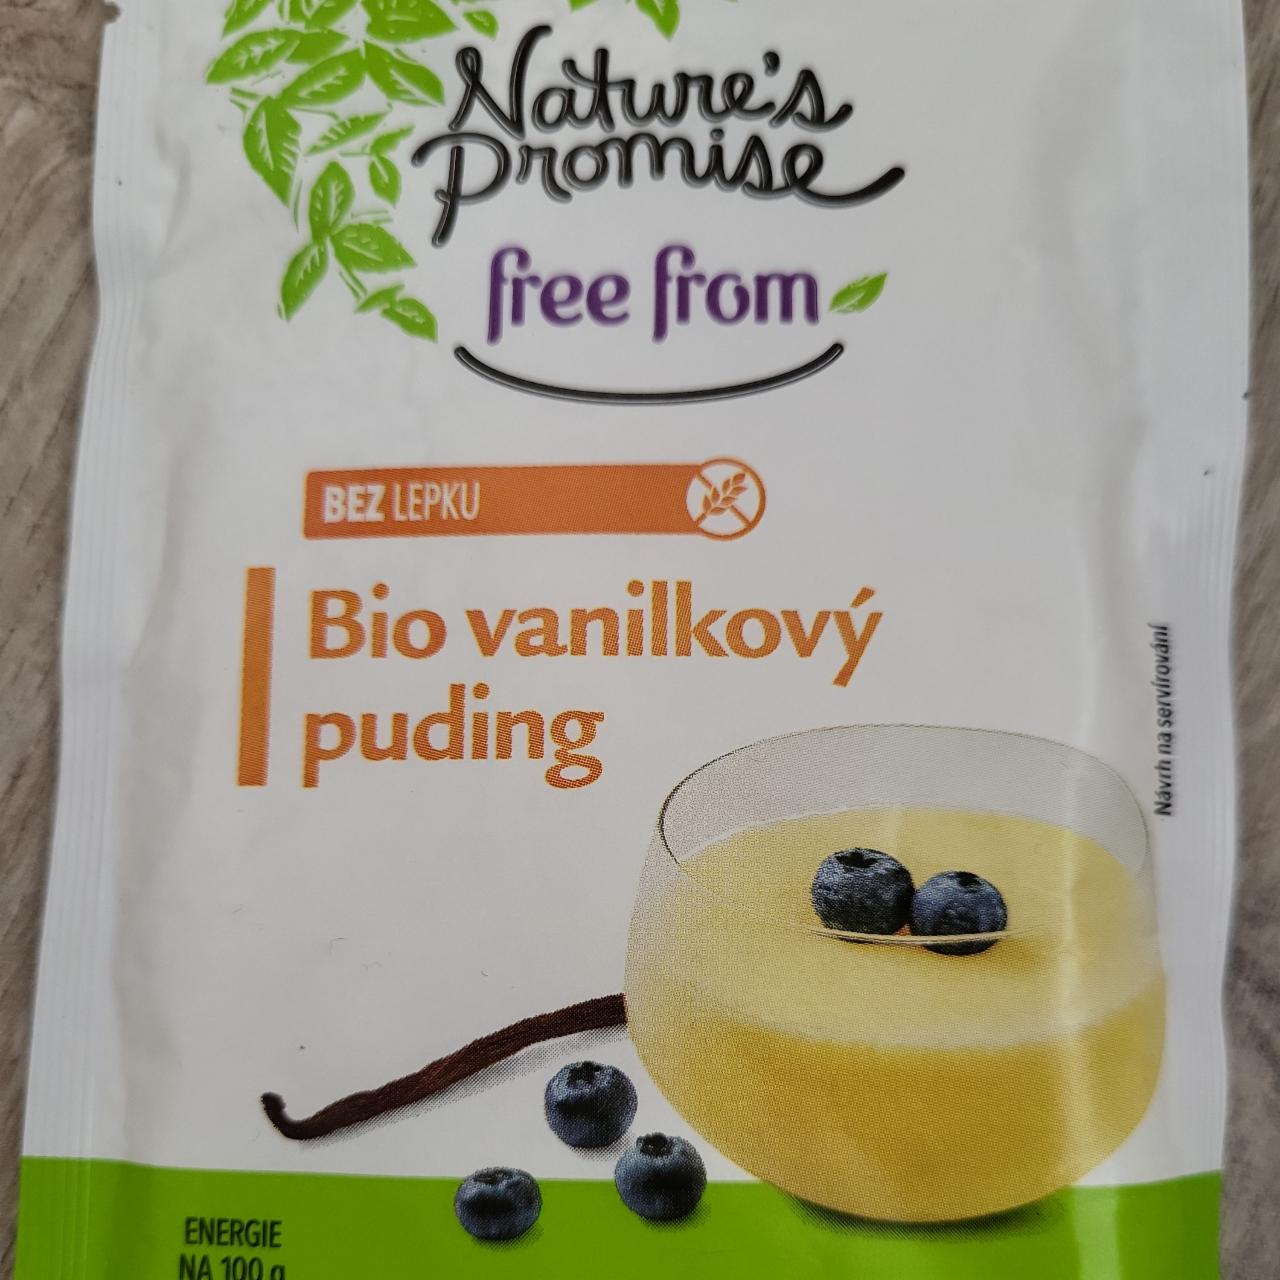 Fotografie - Bio vanilkový puding free from Nature's Promise